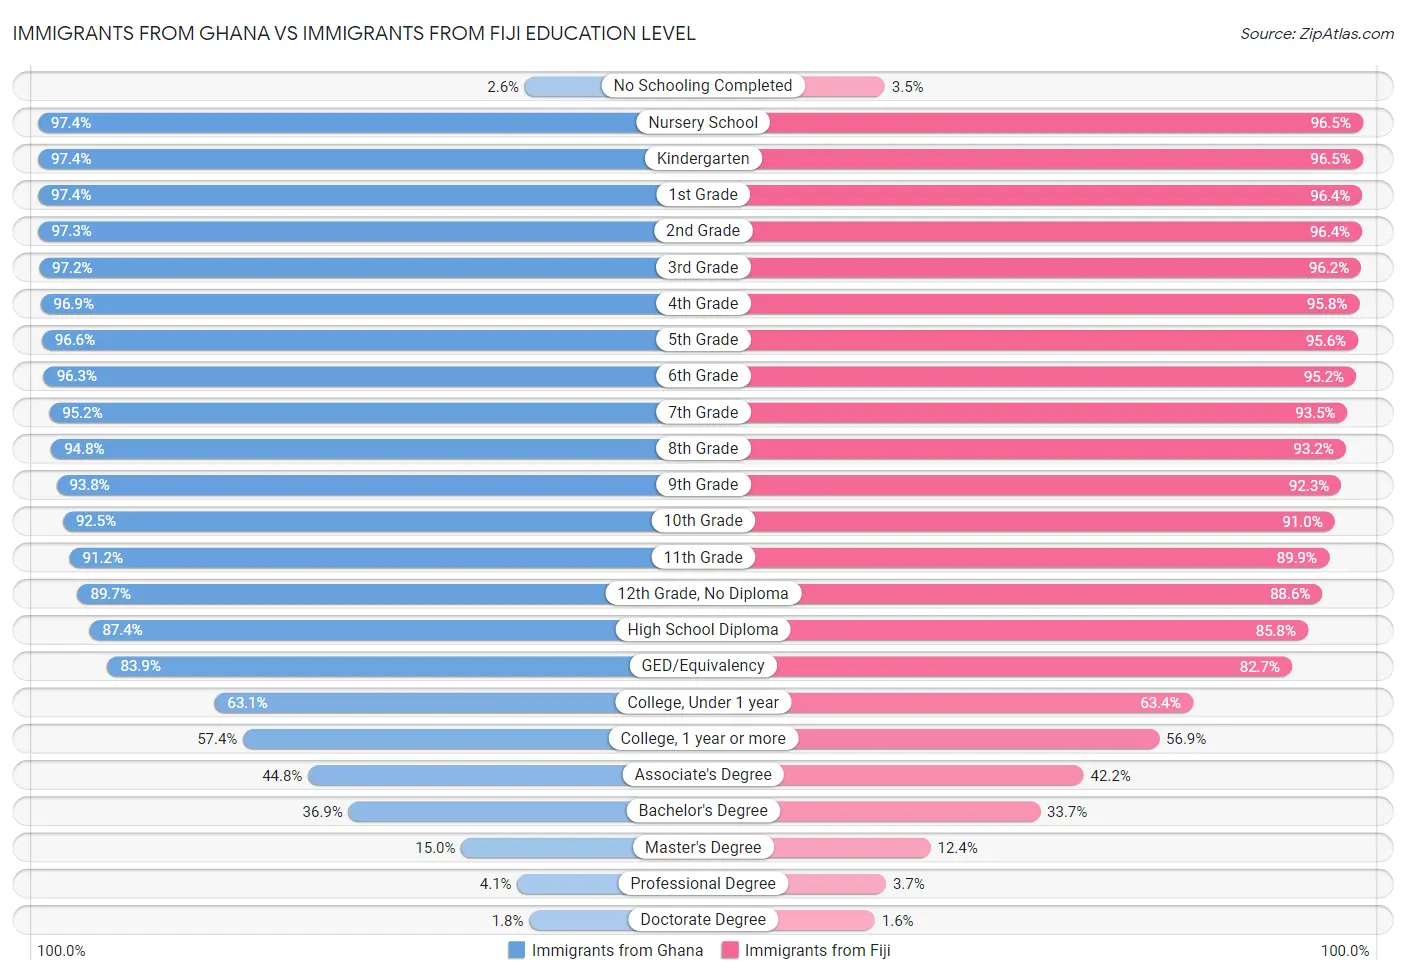 Immigrants from Ghana vs Immigrants from Fiji Education Level